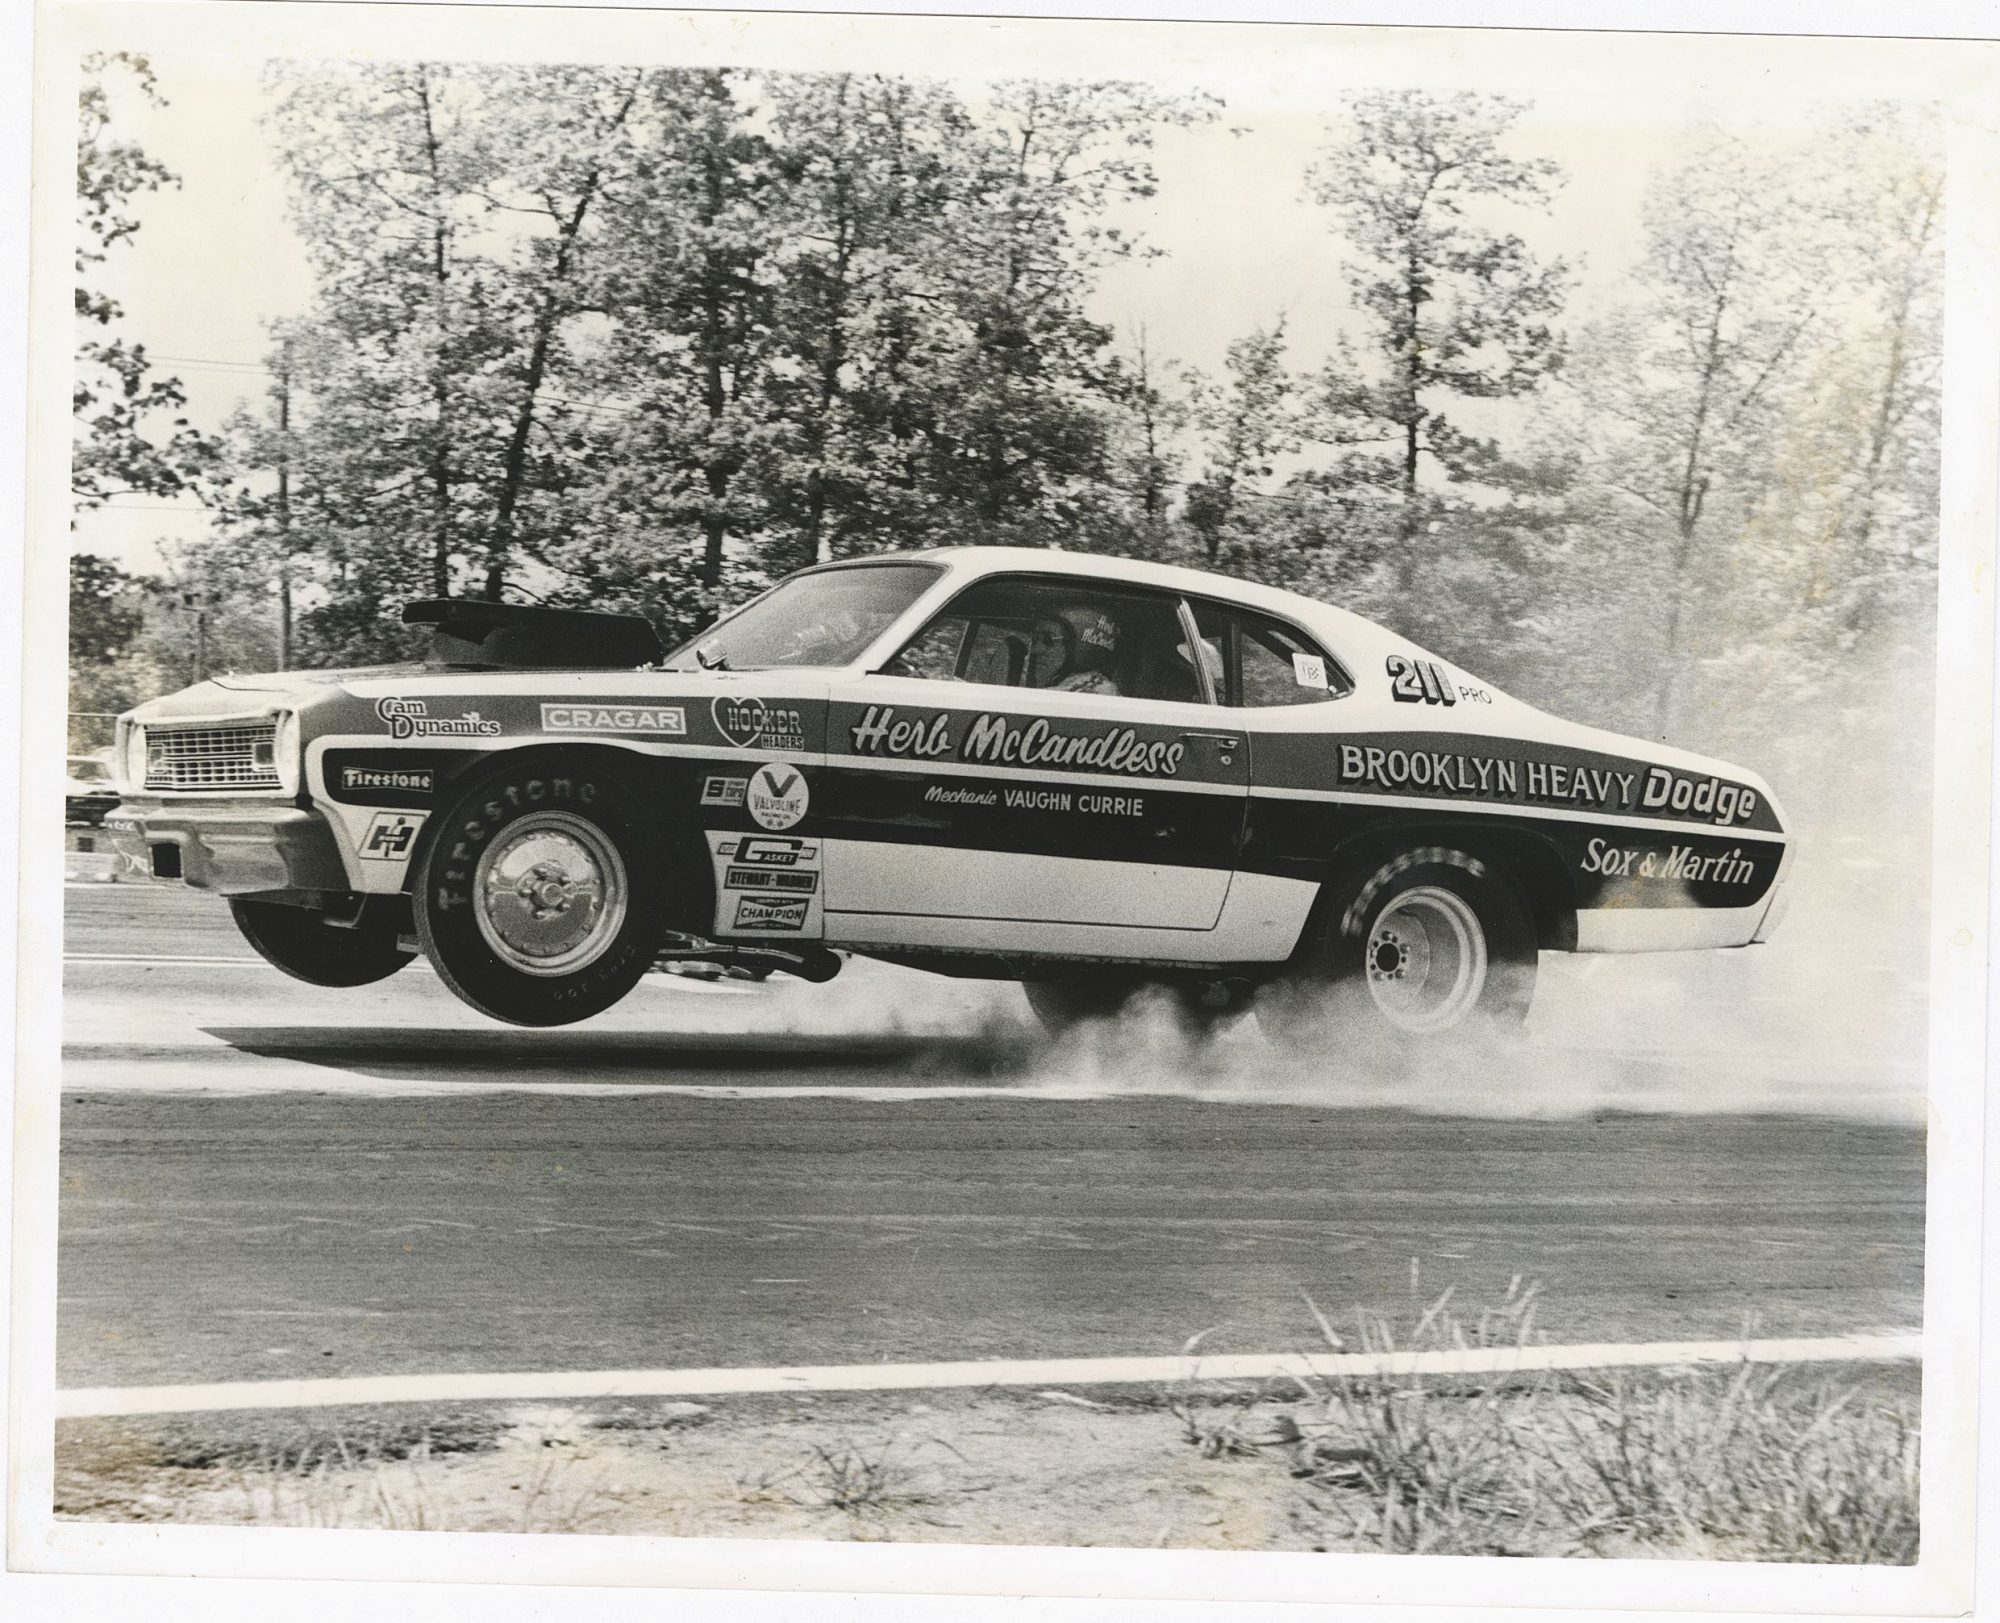 Herb McCandless racing